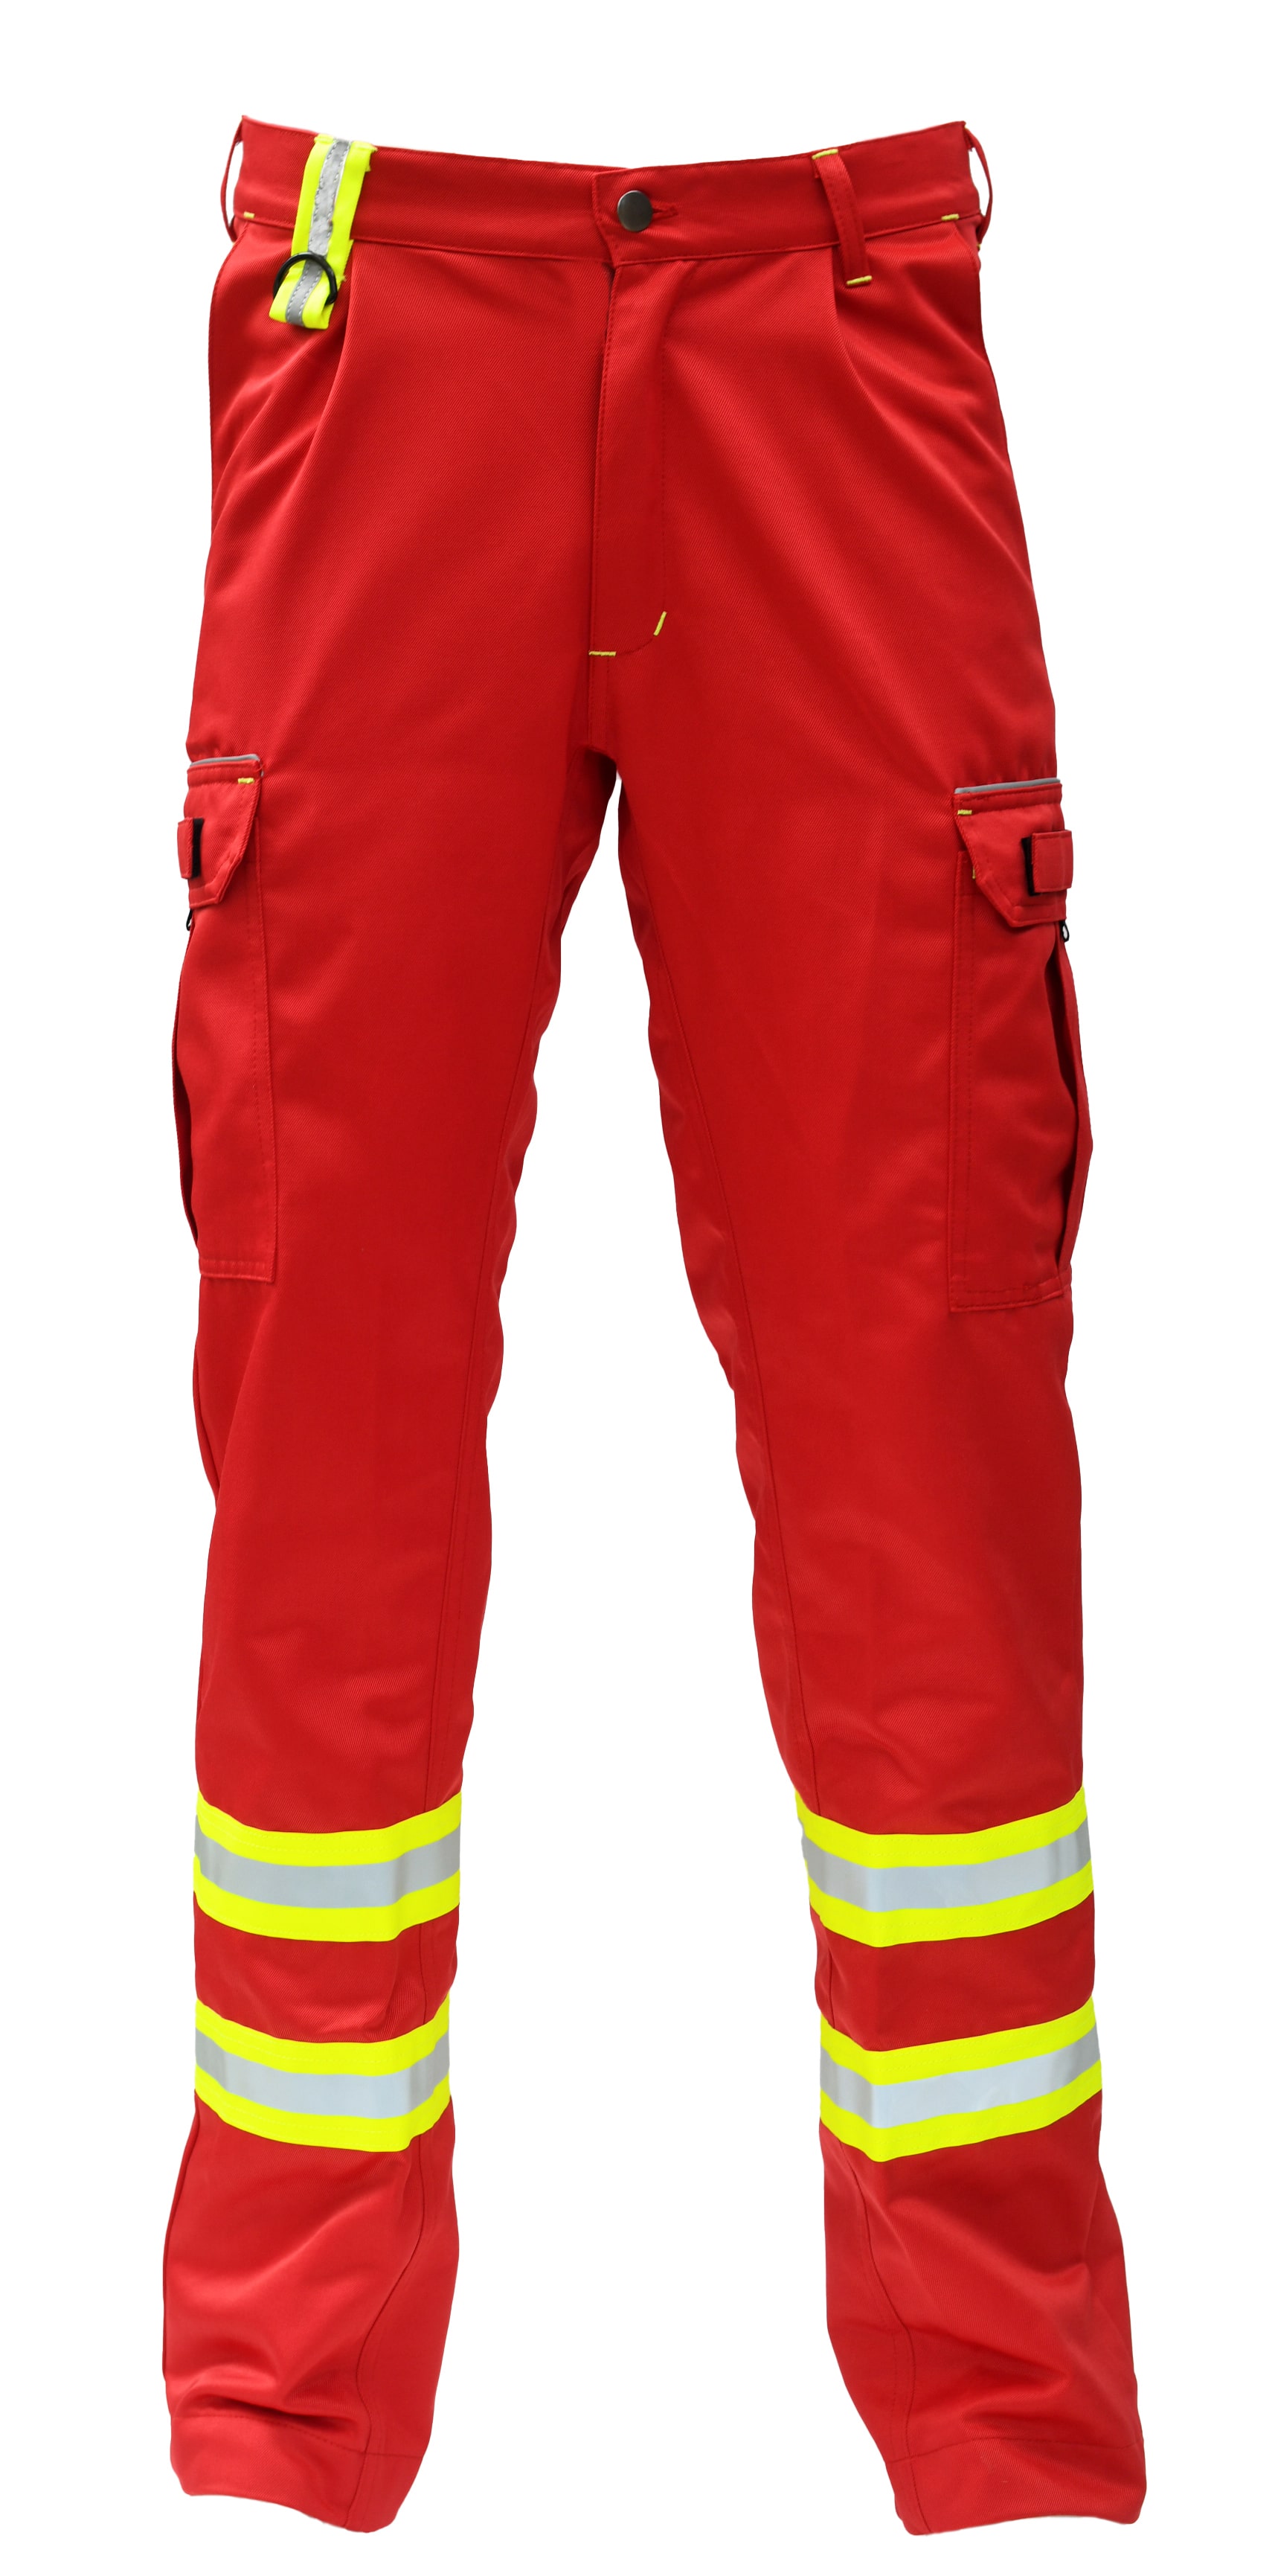 Rescuewear Unisex Hose Wasserrettung Rot - 56